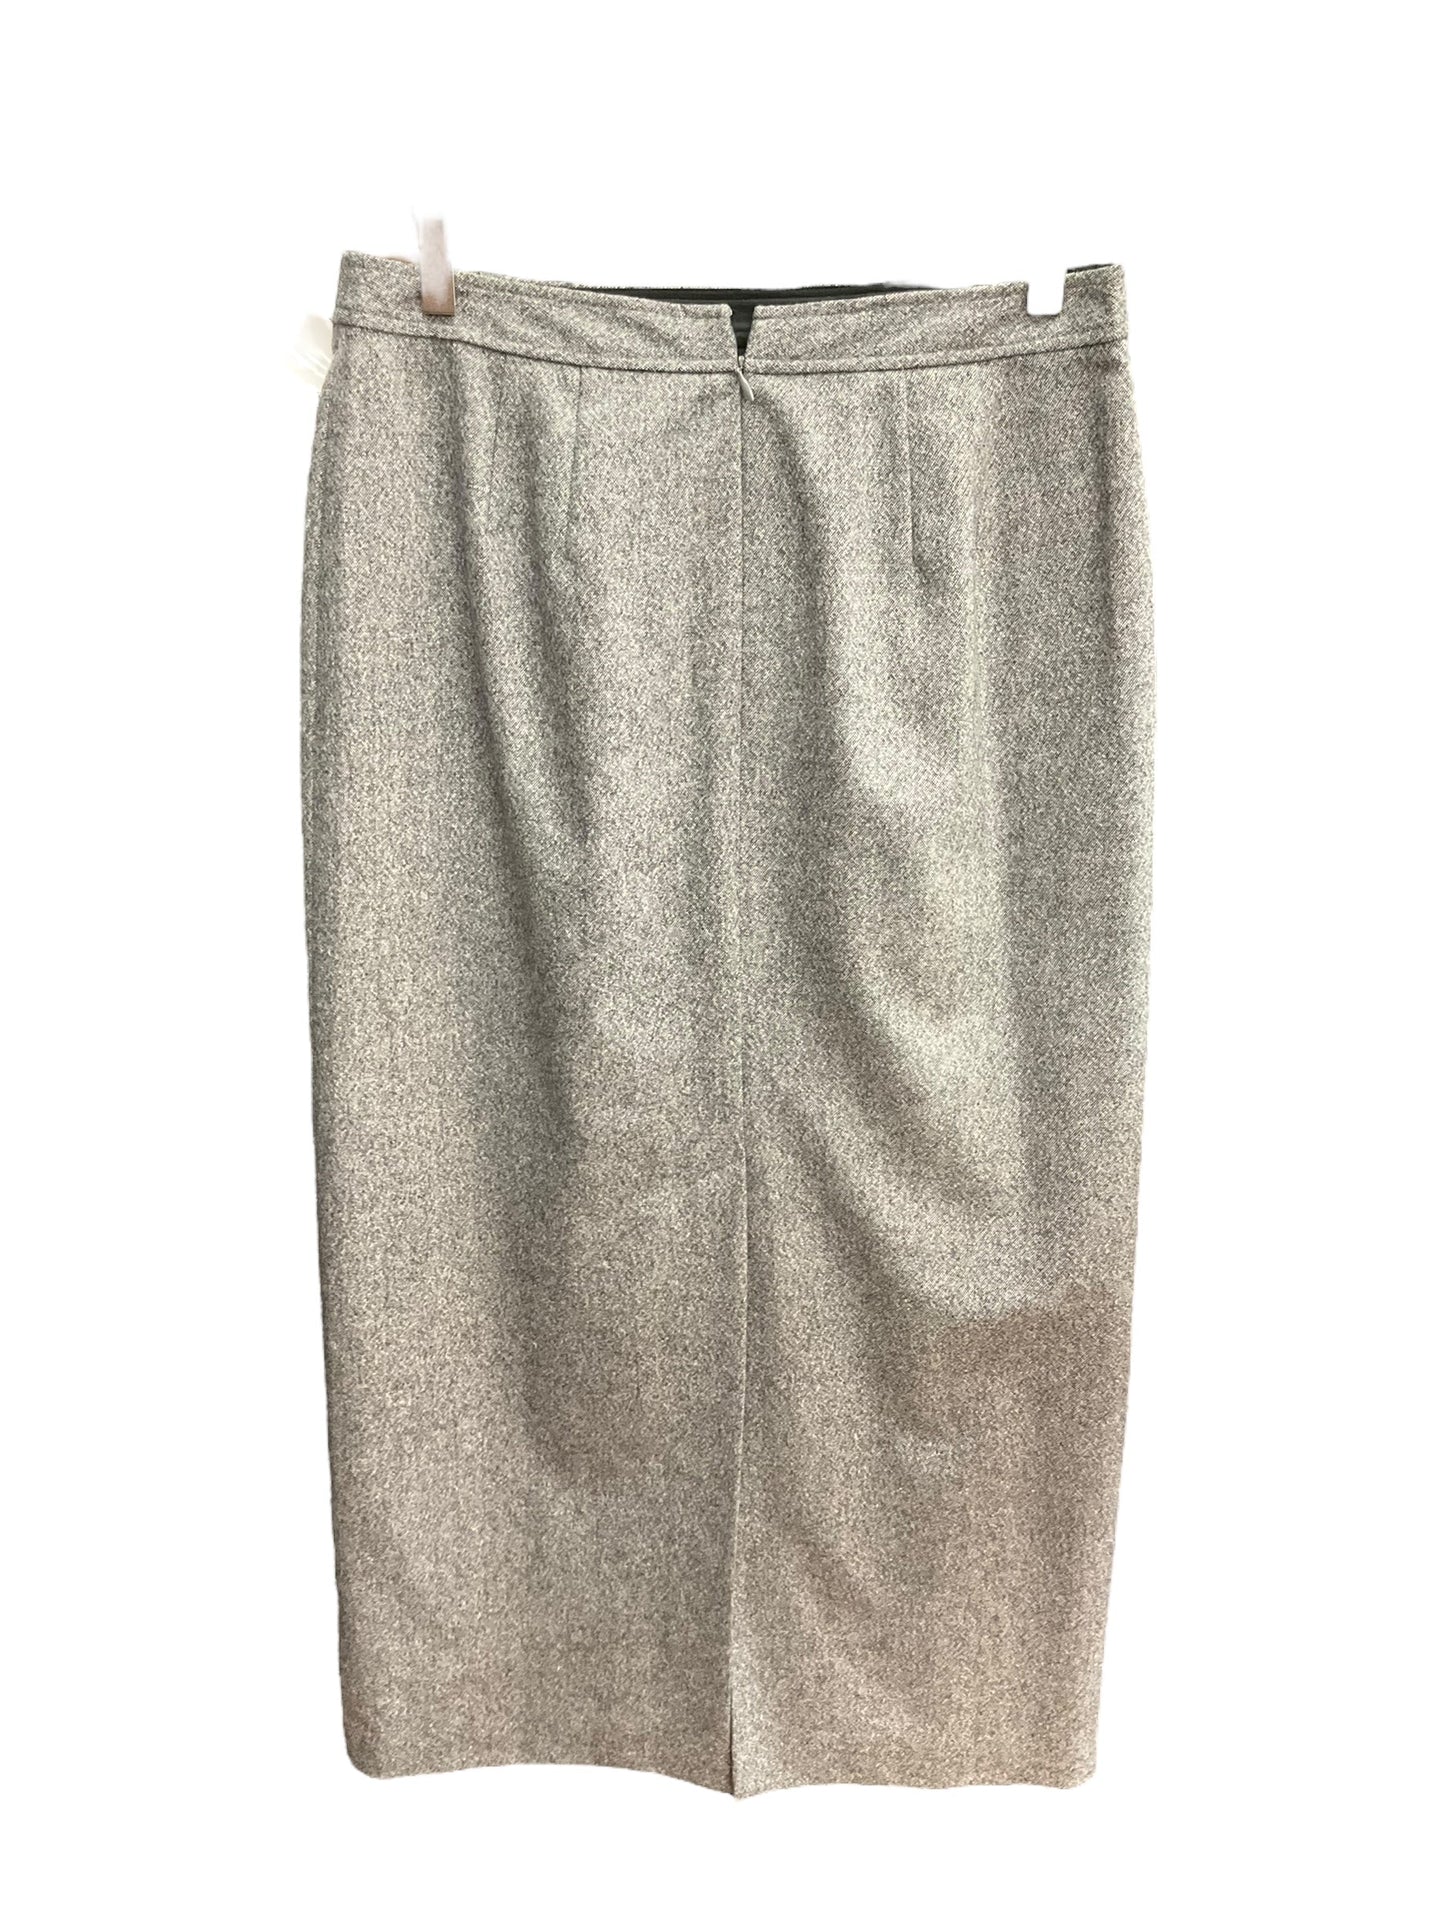 Grey Skirt Maxi Ann Taylor, Size 10